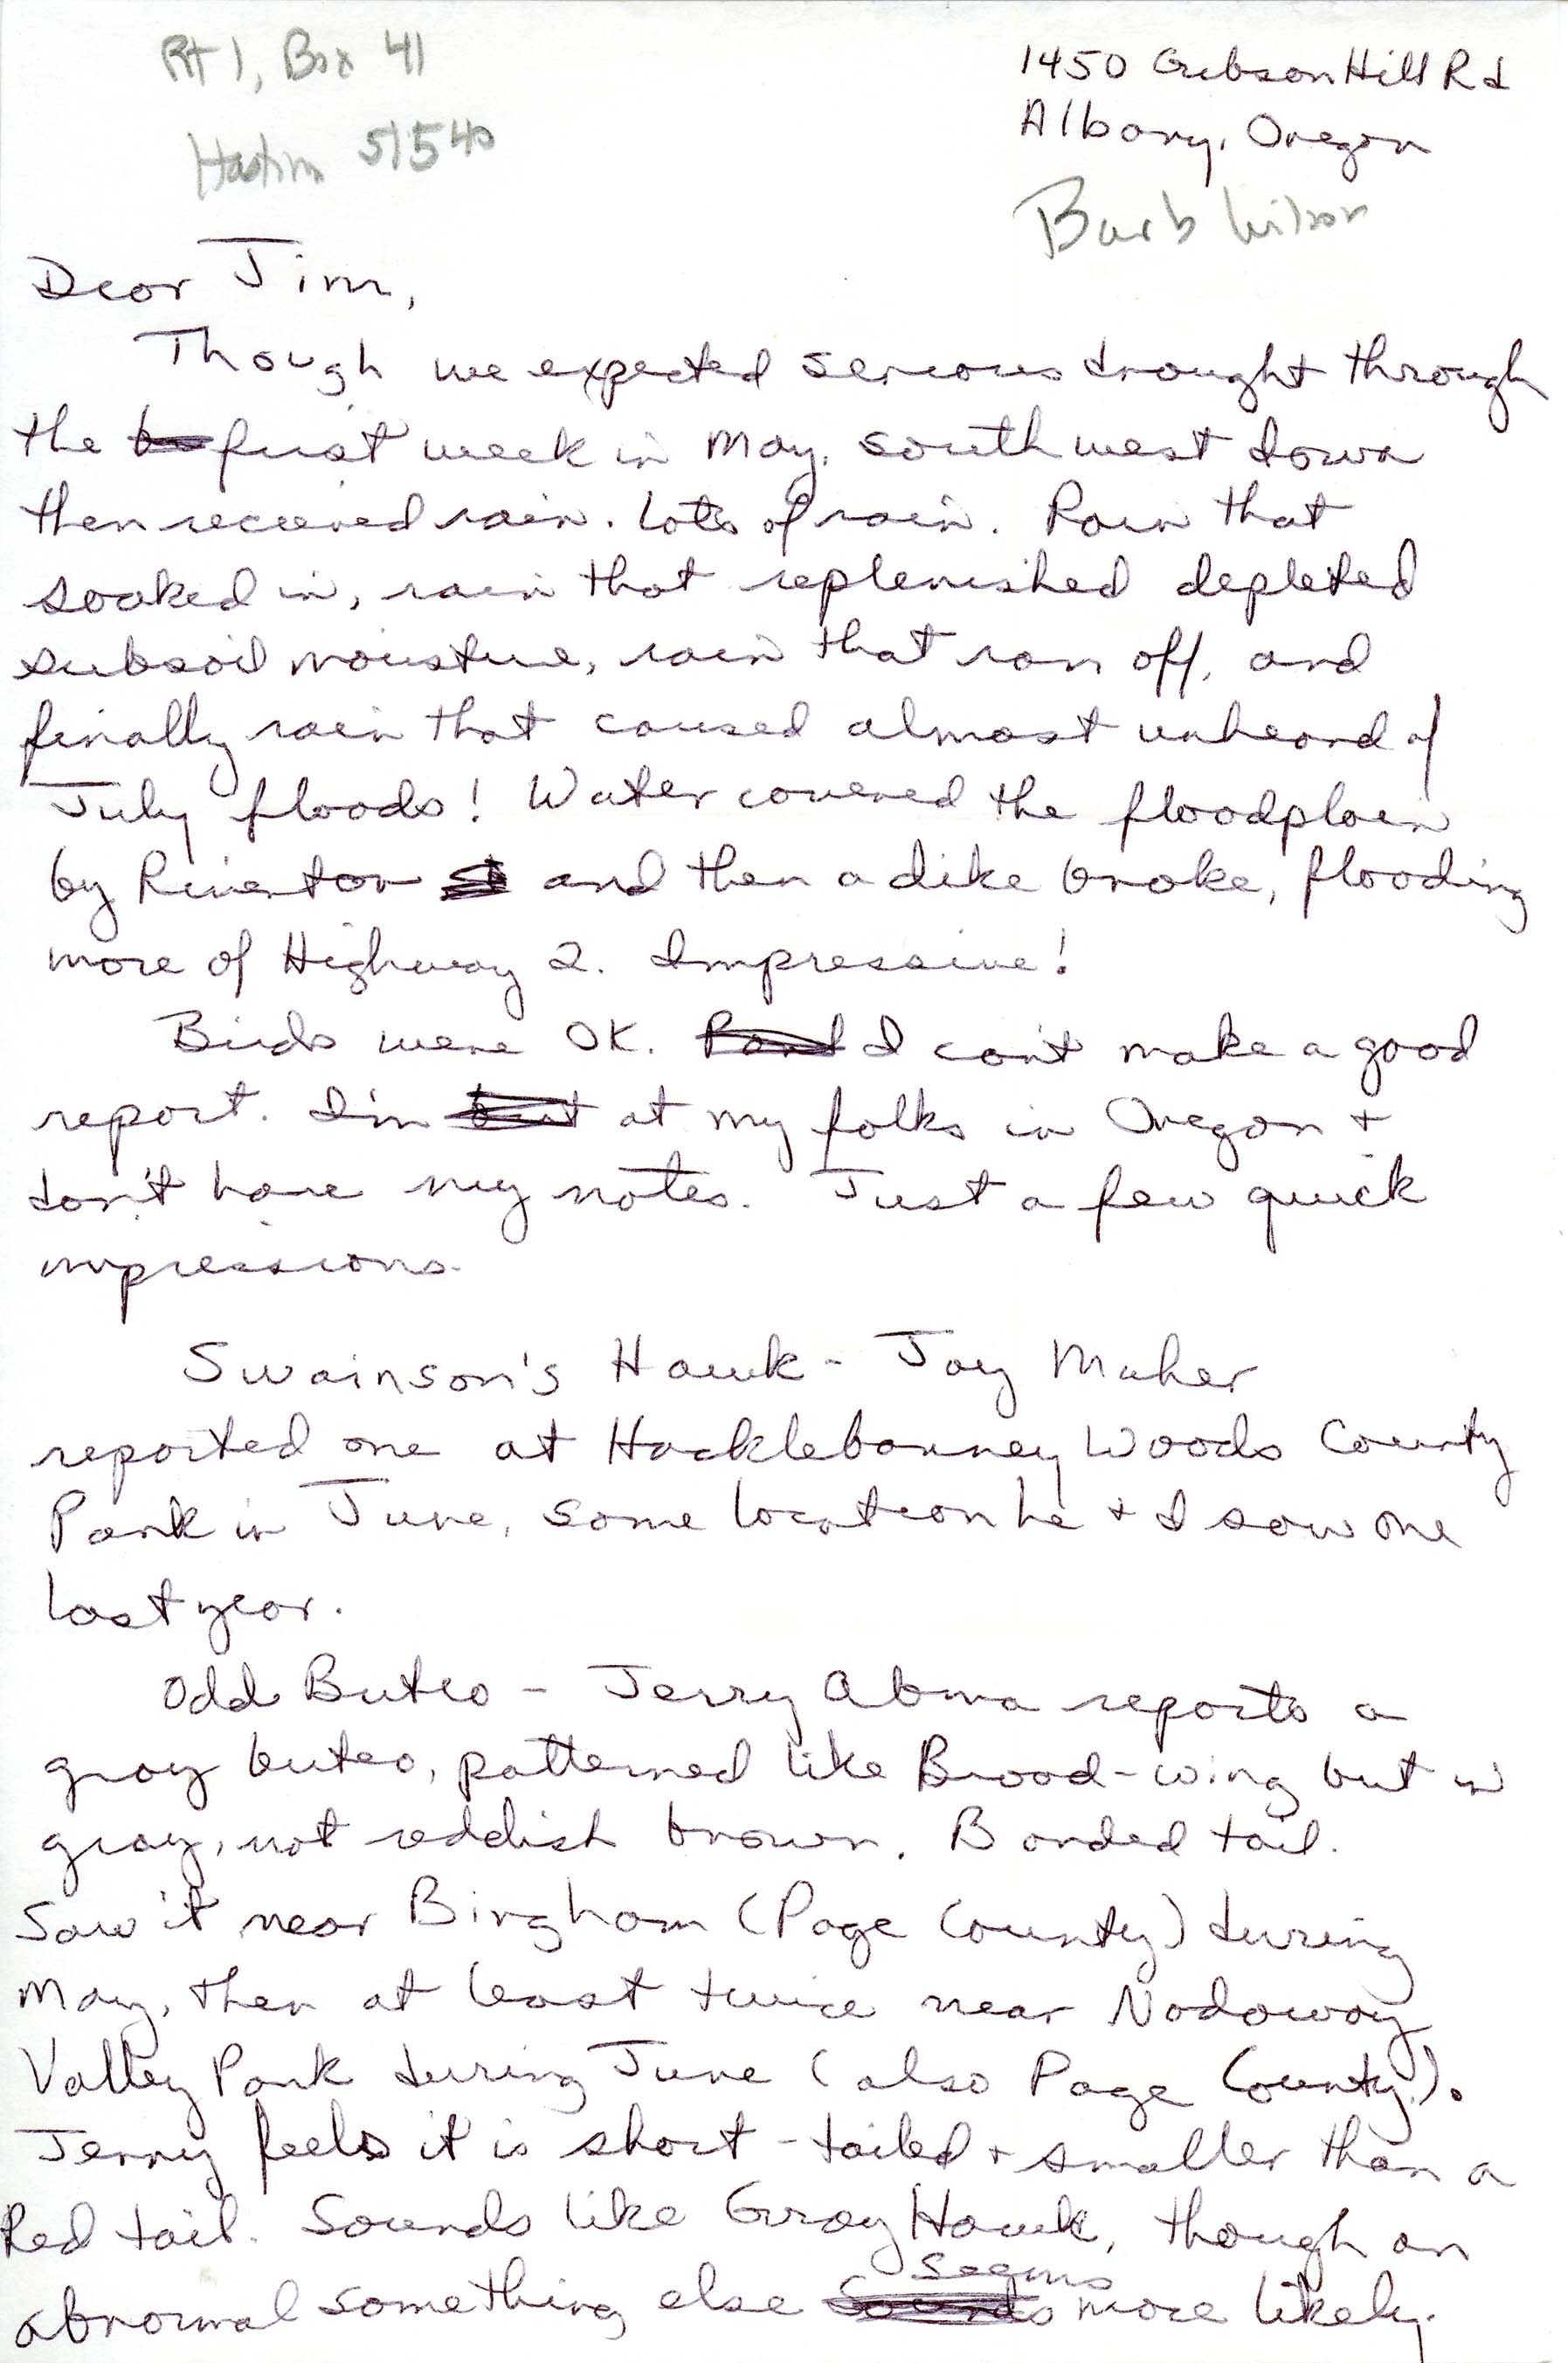 Barb Wilson letter to Jim Dinsmore regarding bird sightings for IOU quarterly field reports, summer 1990